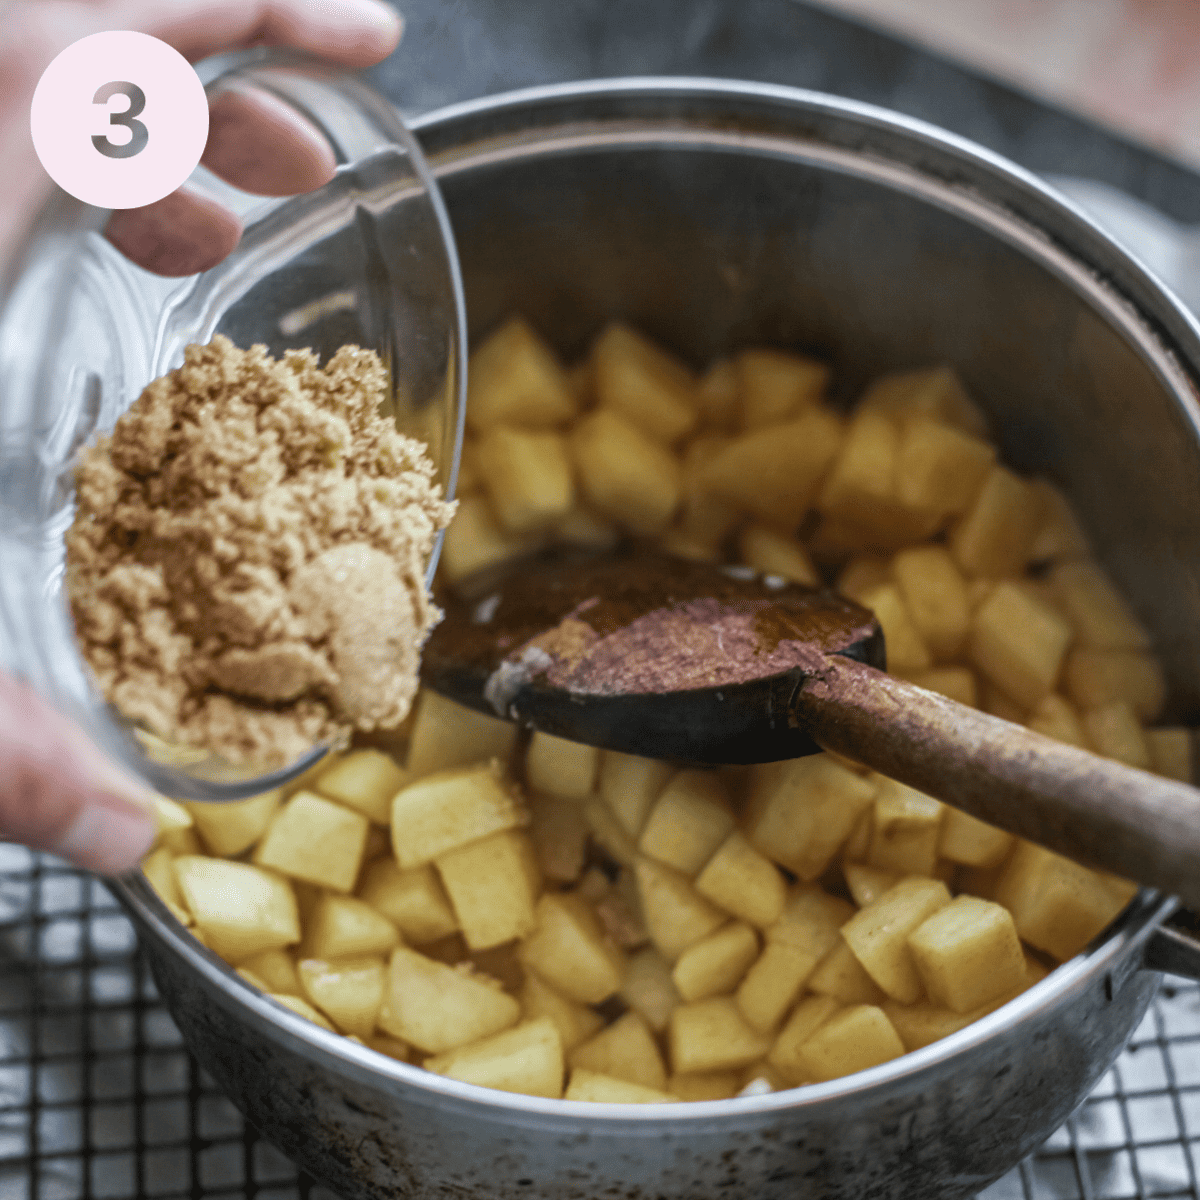 Adding brown sugar to sauteed apples.